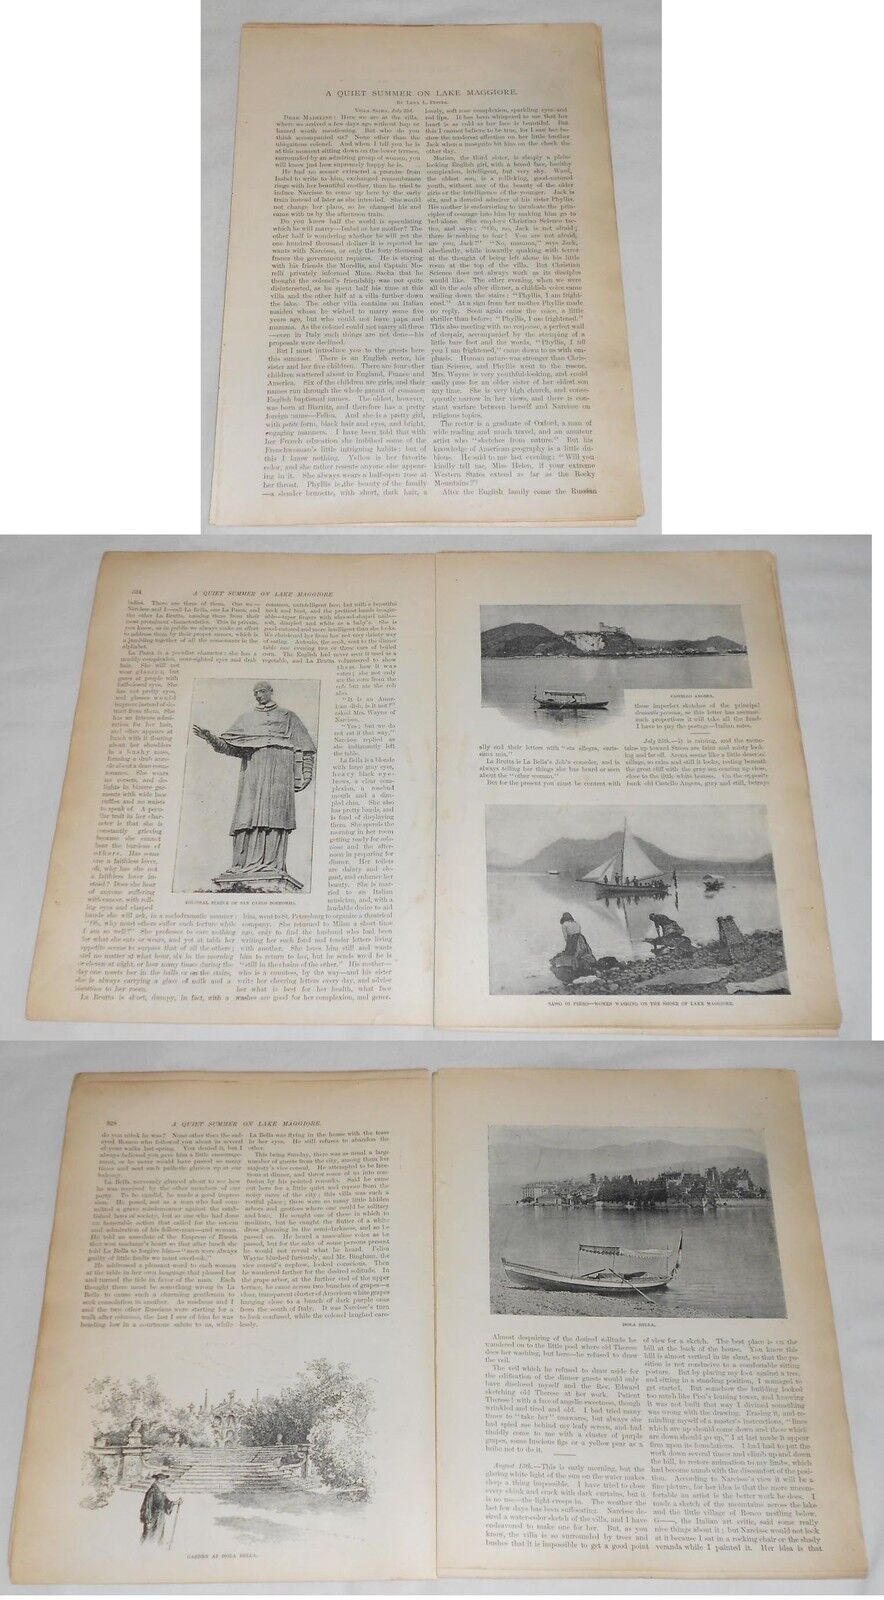 1895 article ~ QUIET SUMMER ON LAKE MAGGIORE